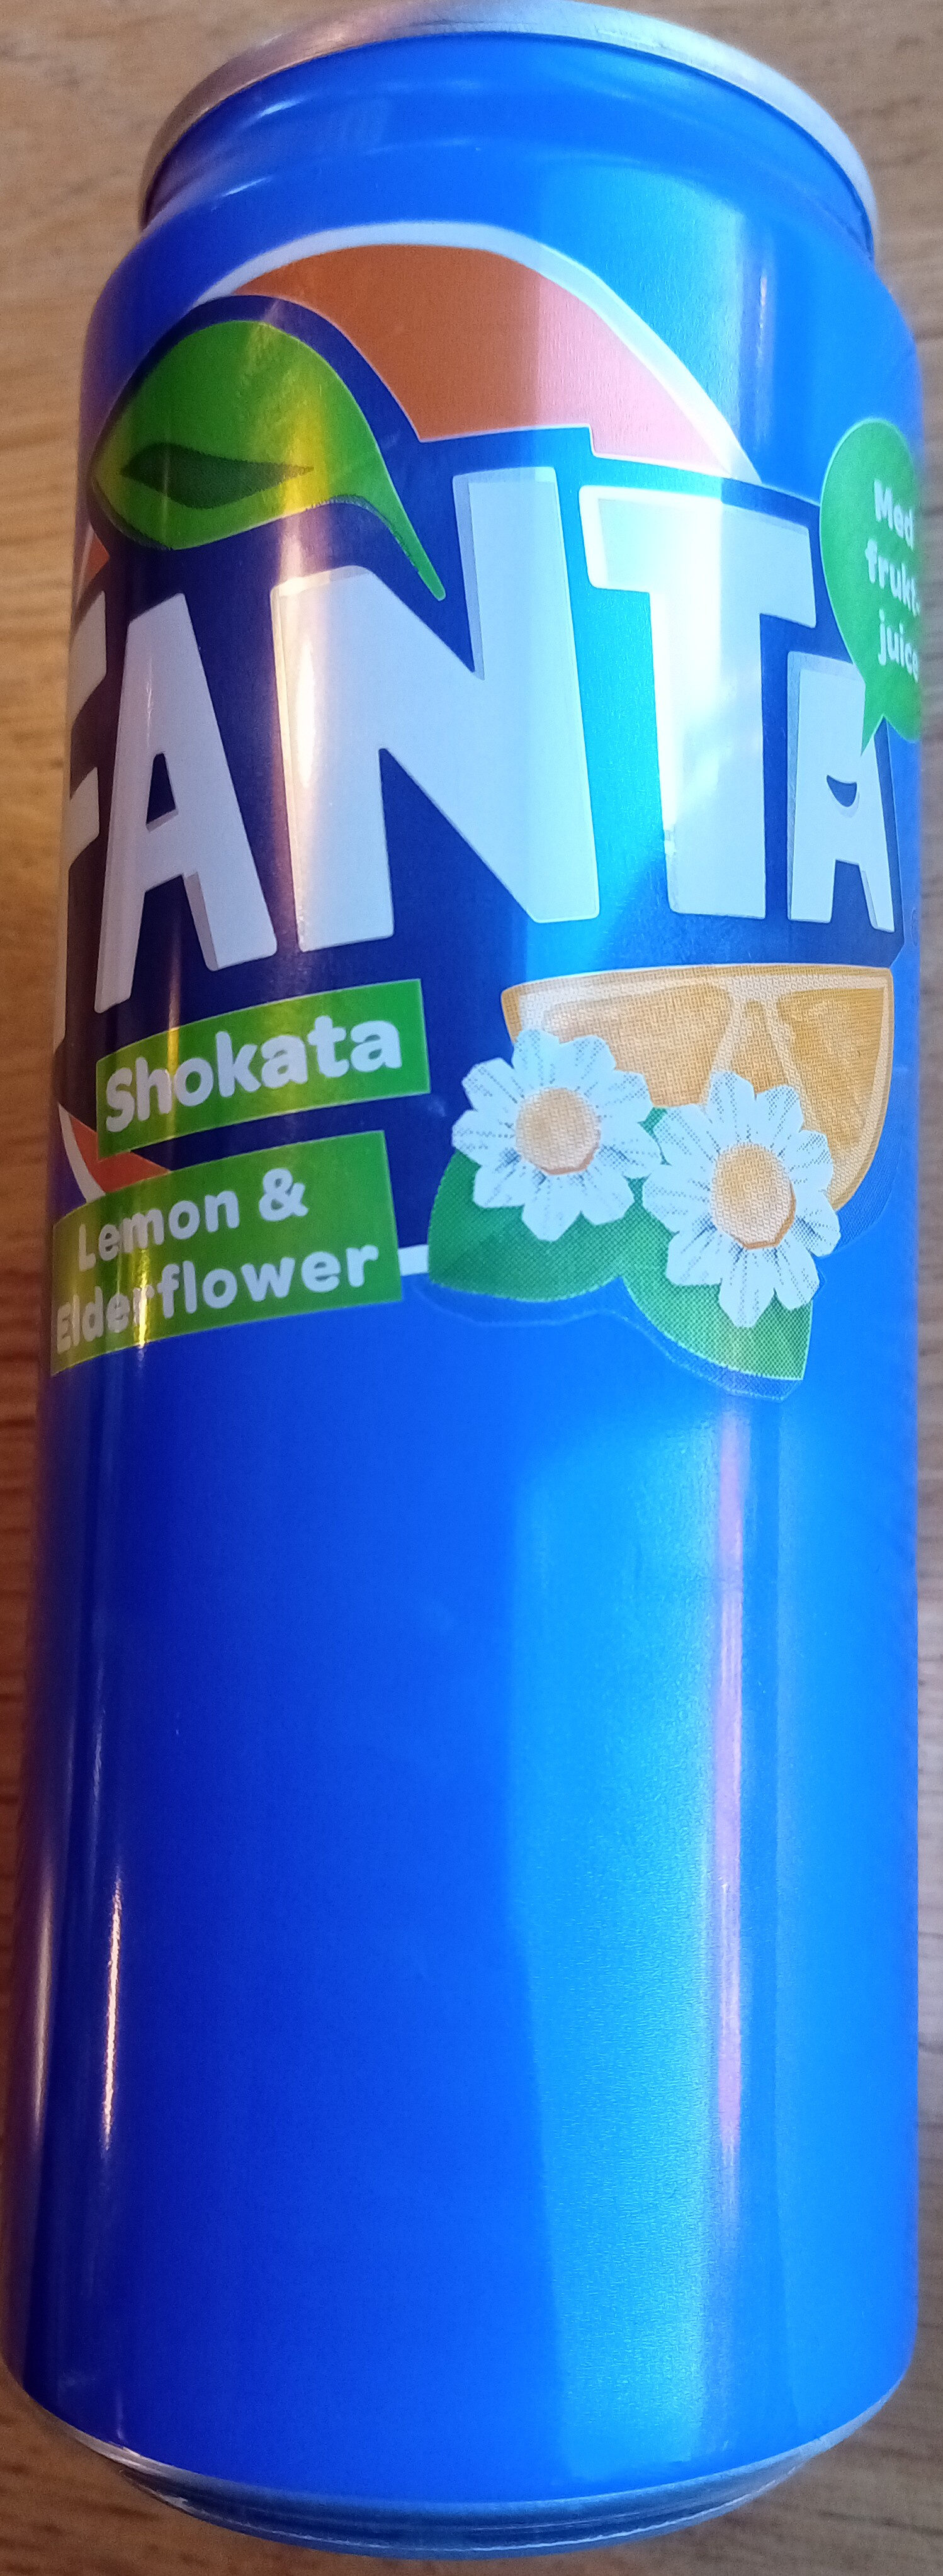 Fanta Shokata Lemon & Elderflower - Product - sv